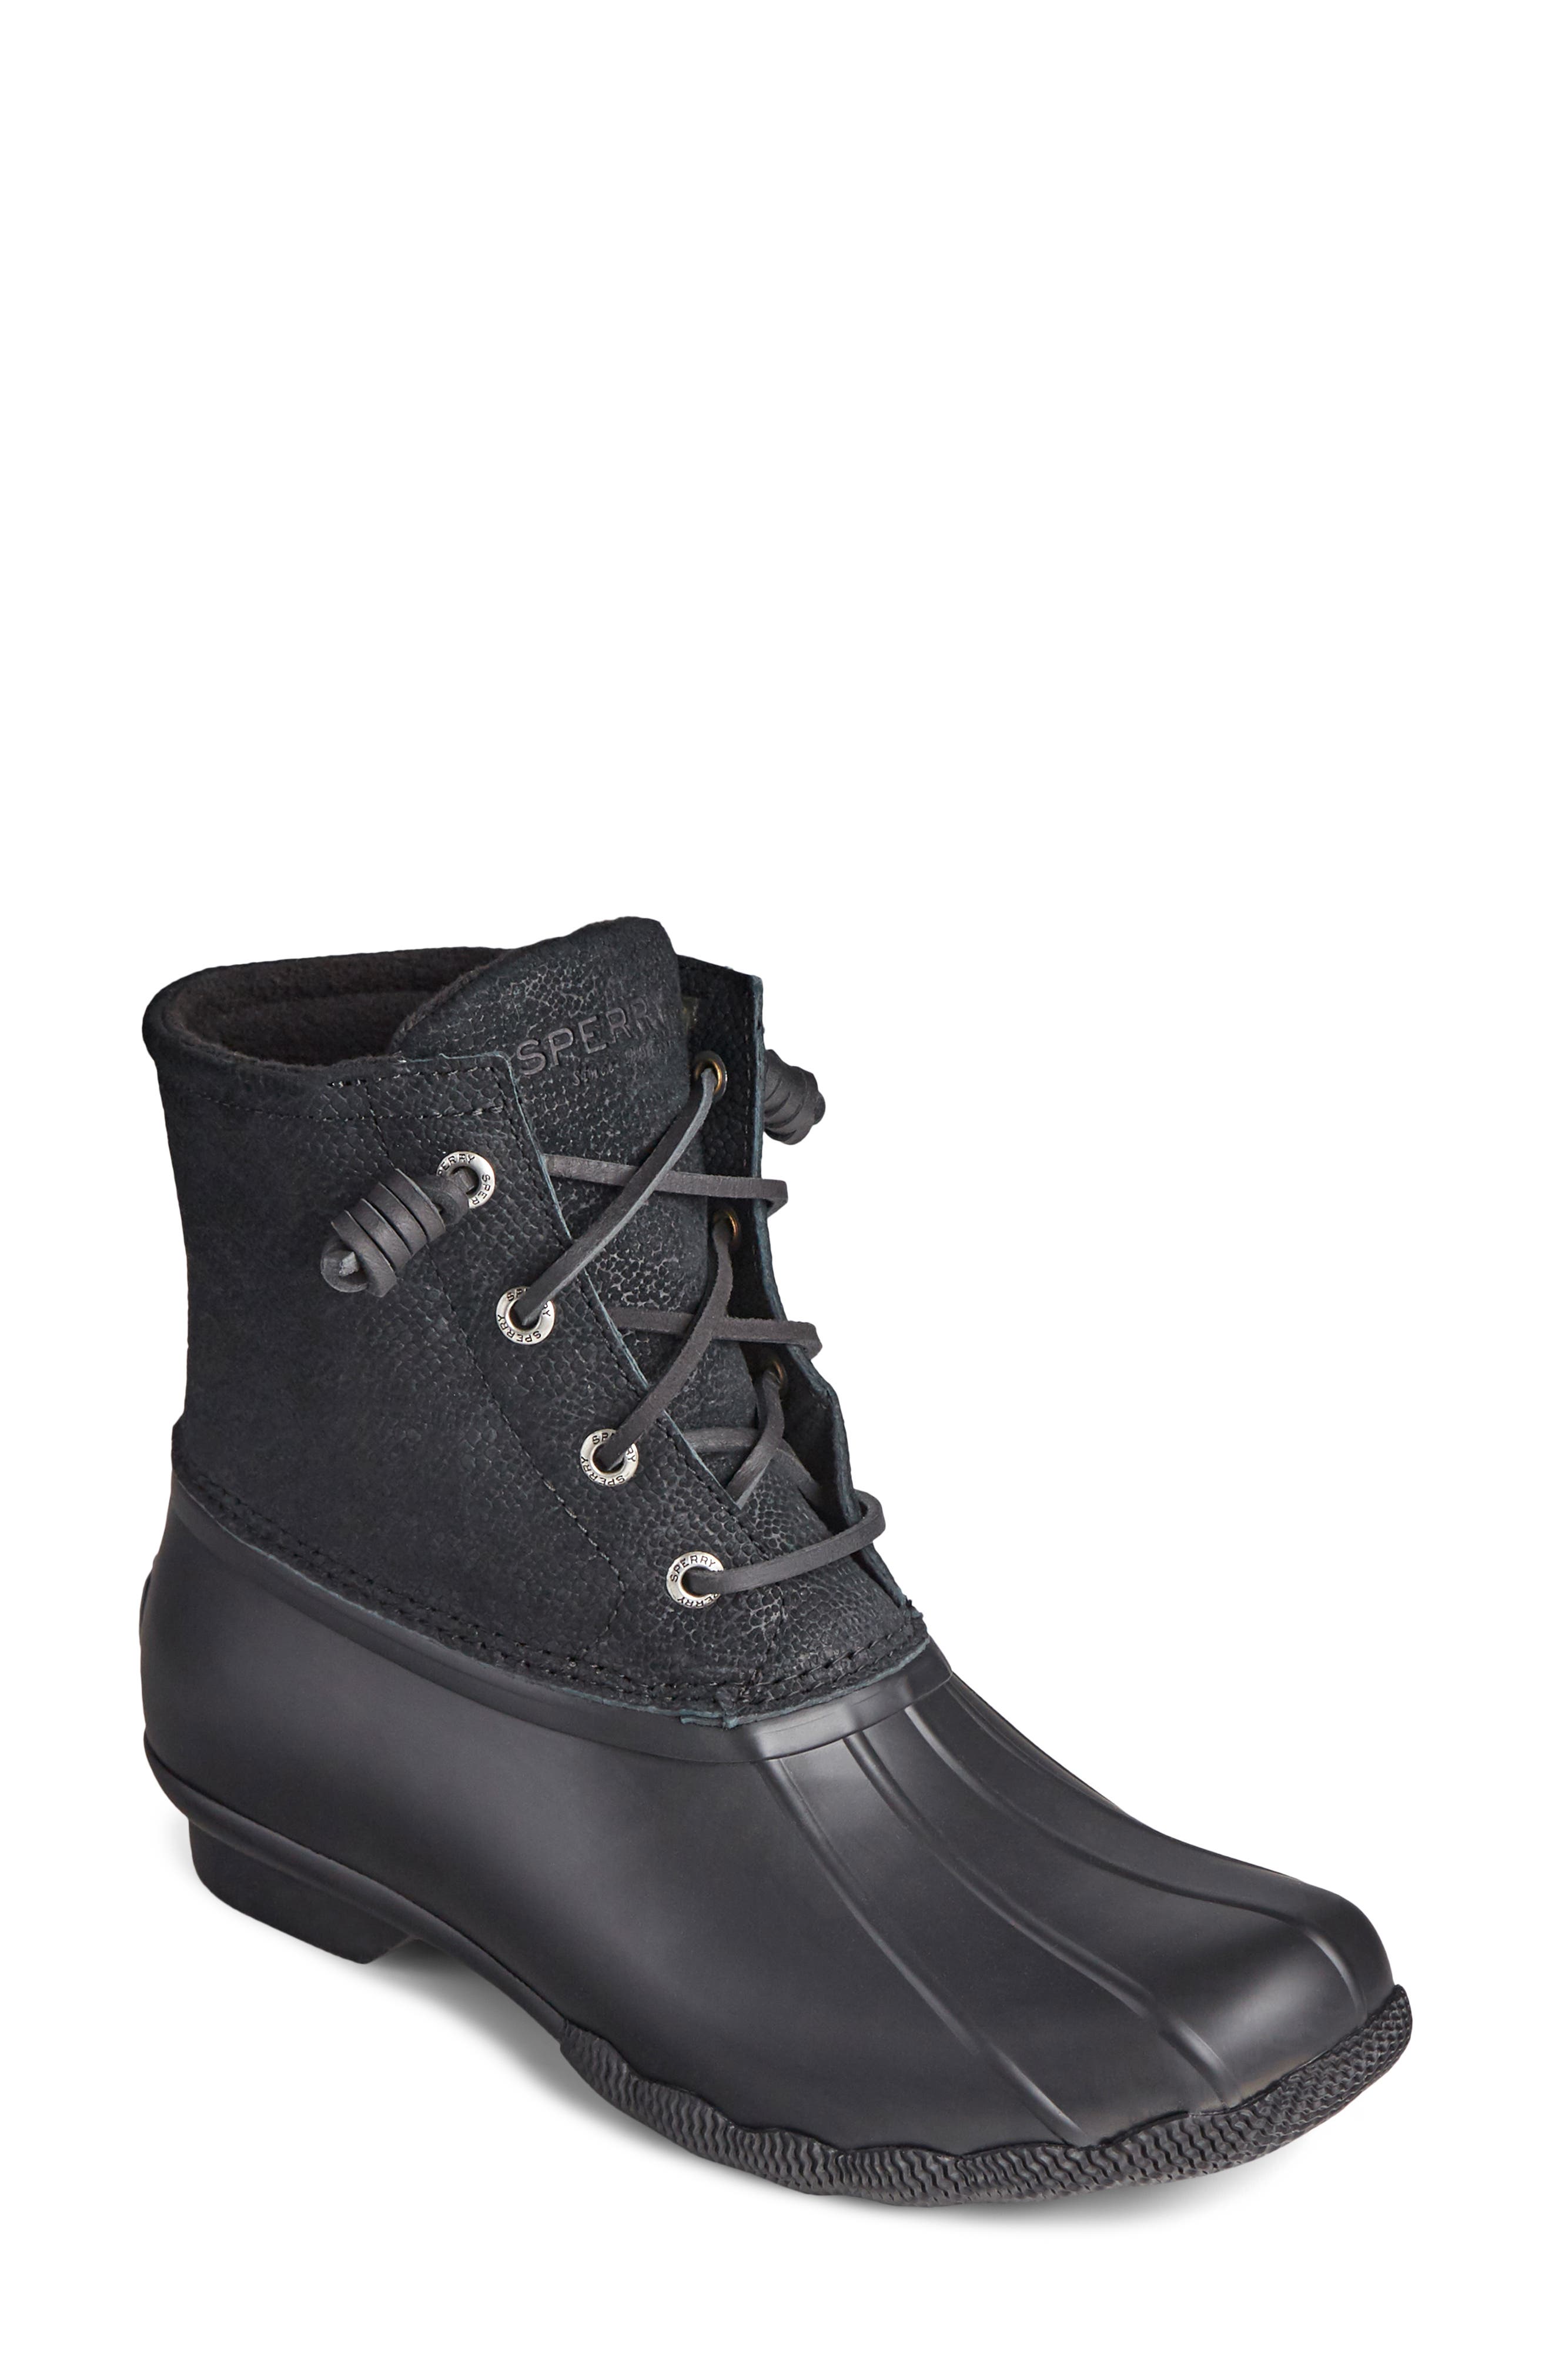 sperry rain boots